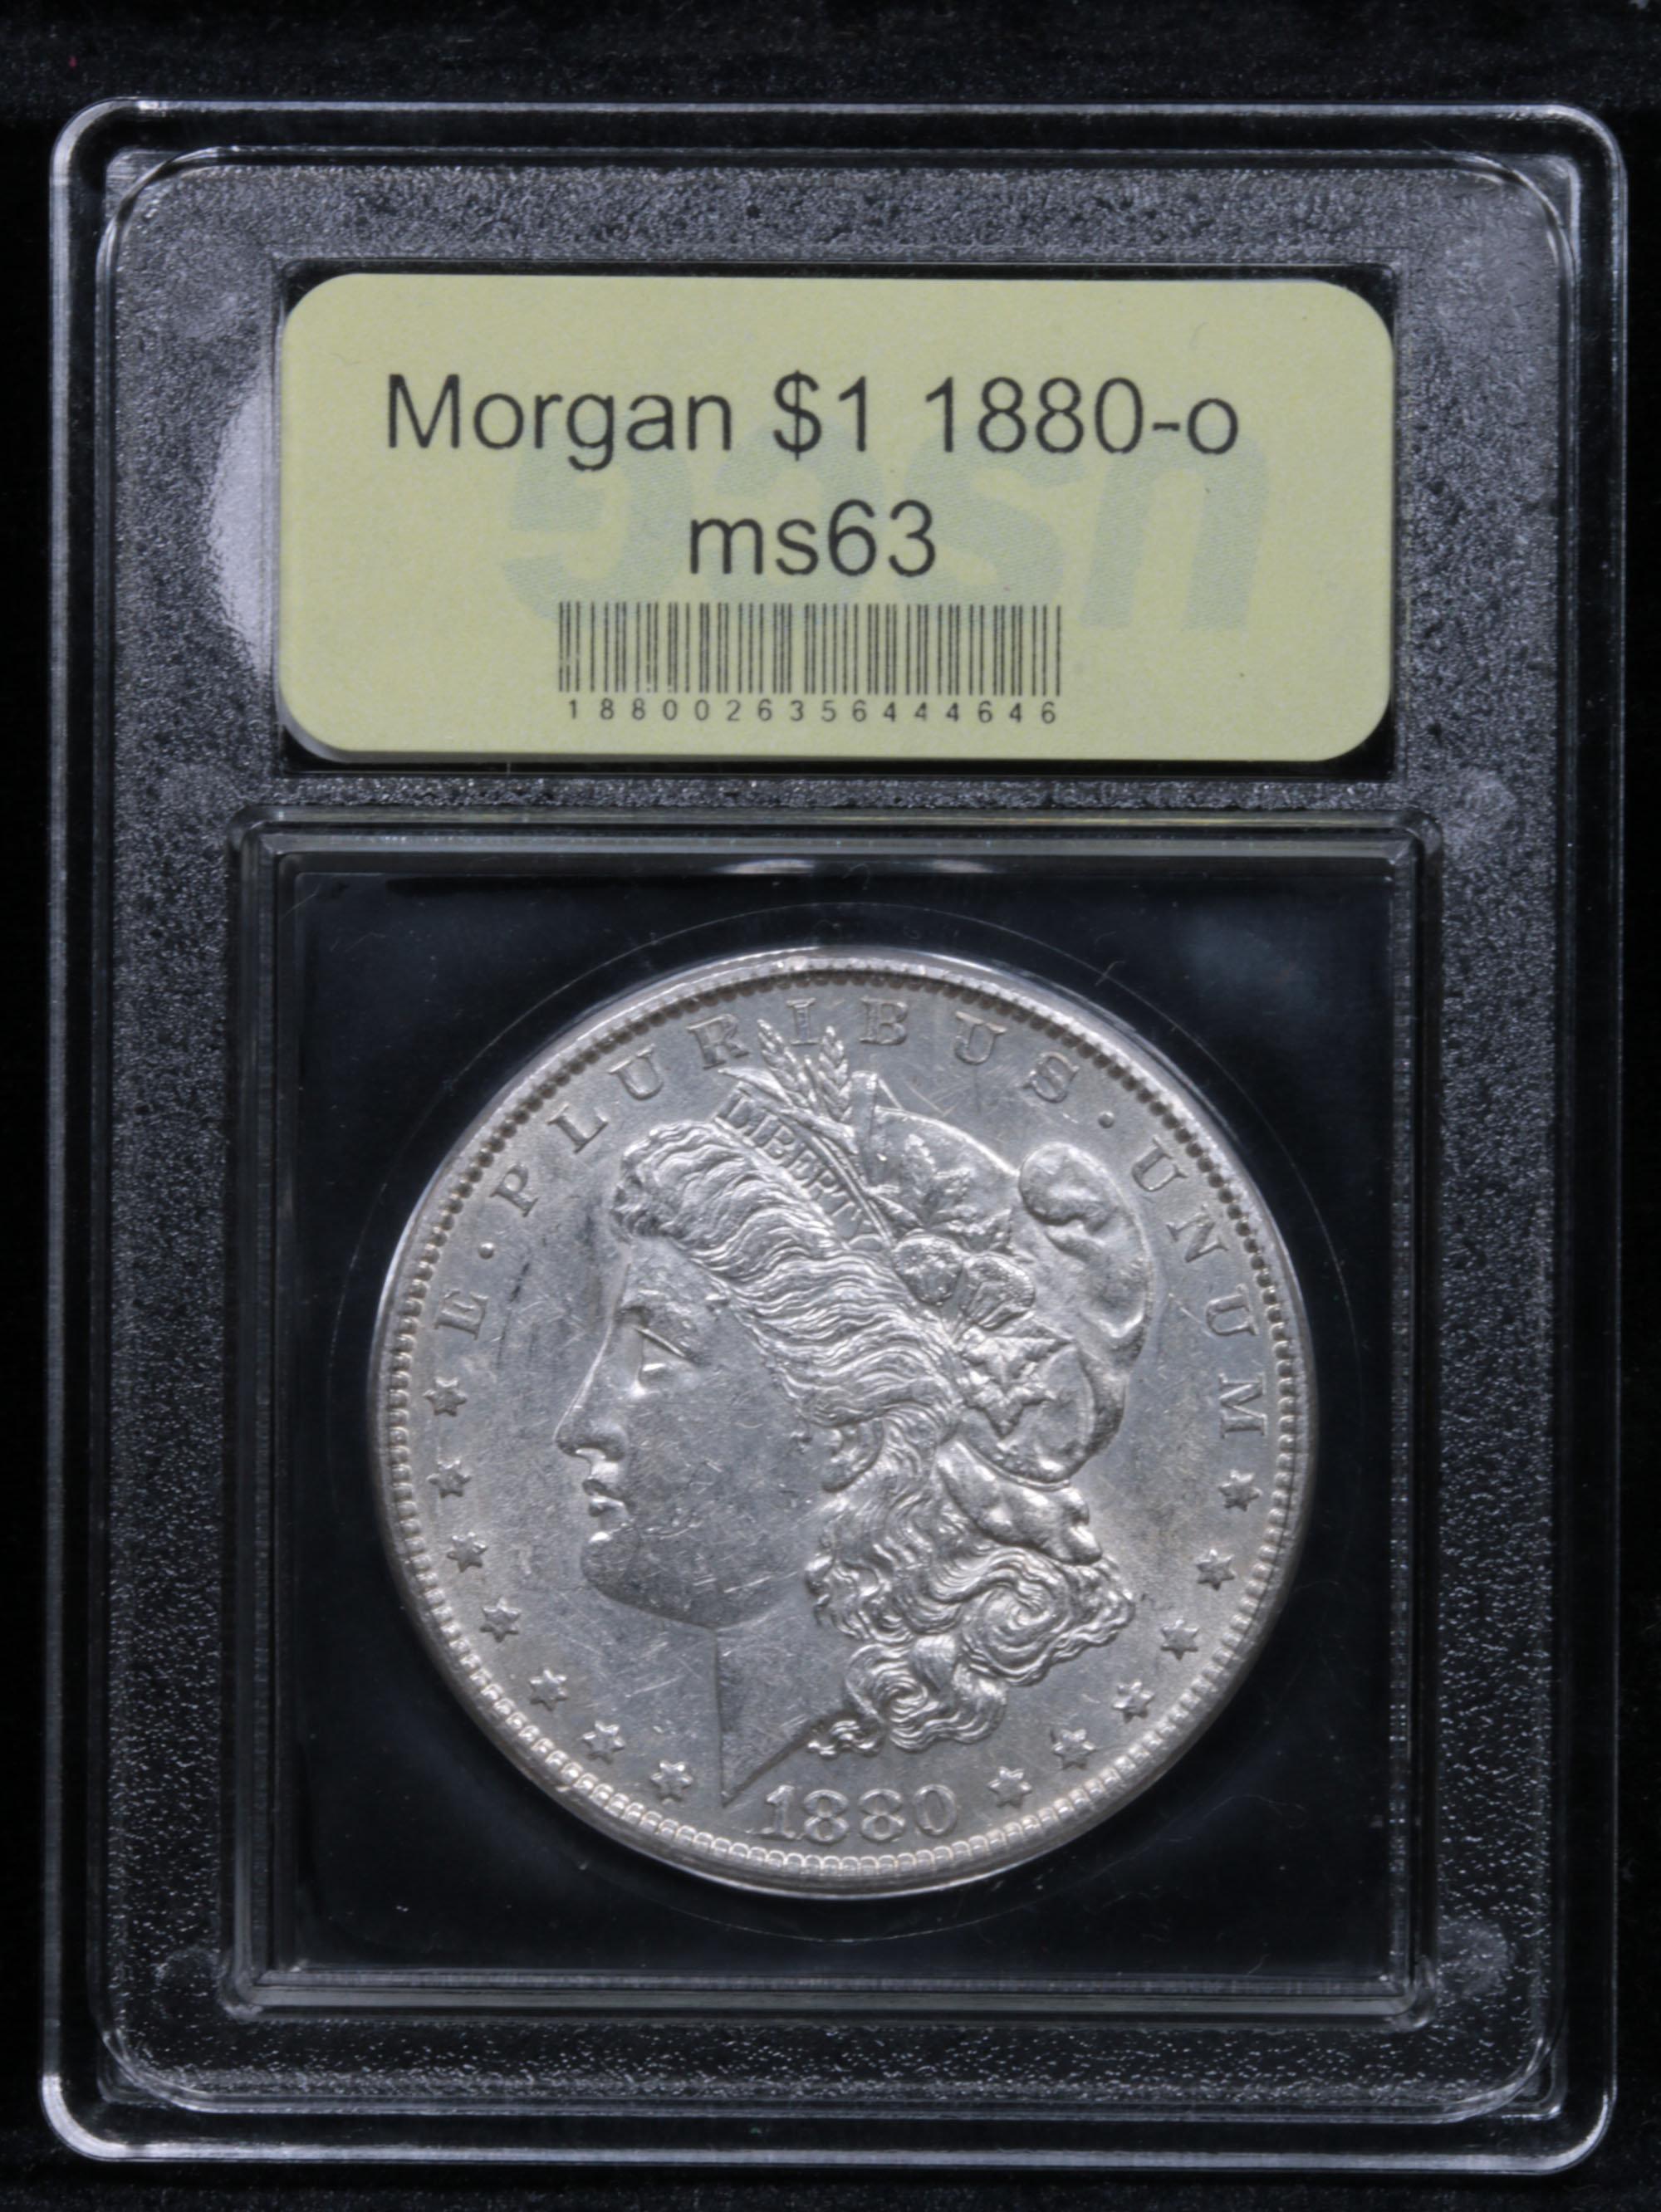 ***Auction Highlight*** 1880-o Morgan Dollar $1 Graded Select Unc by USCG (fc)